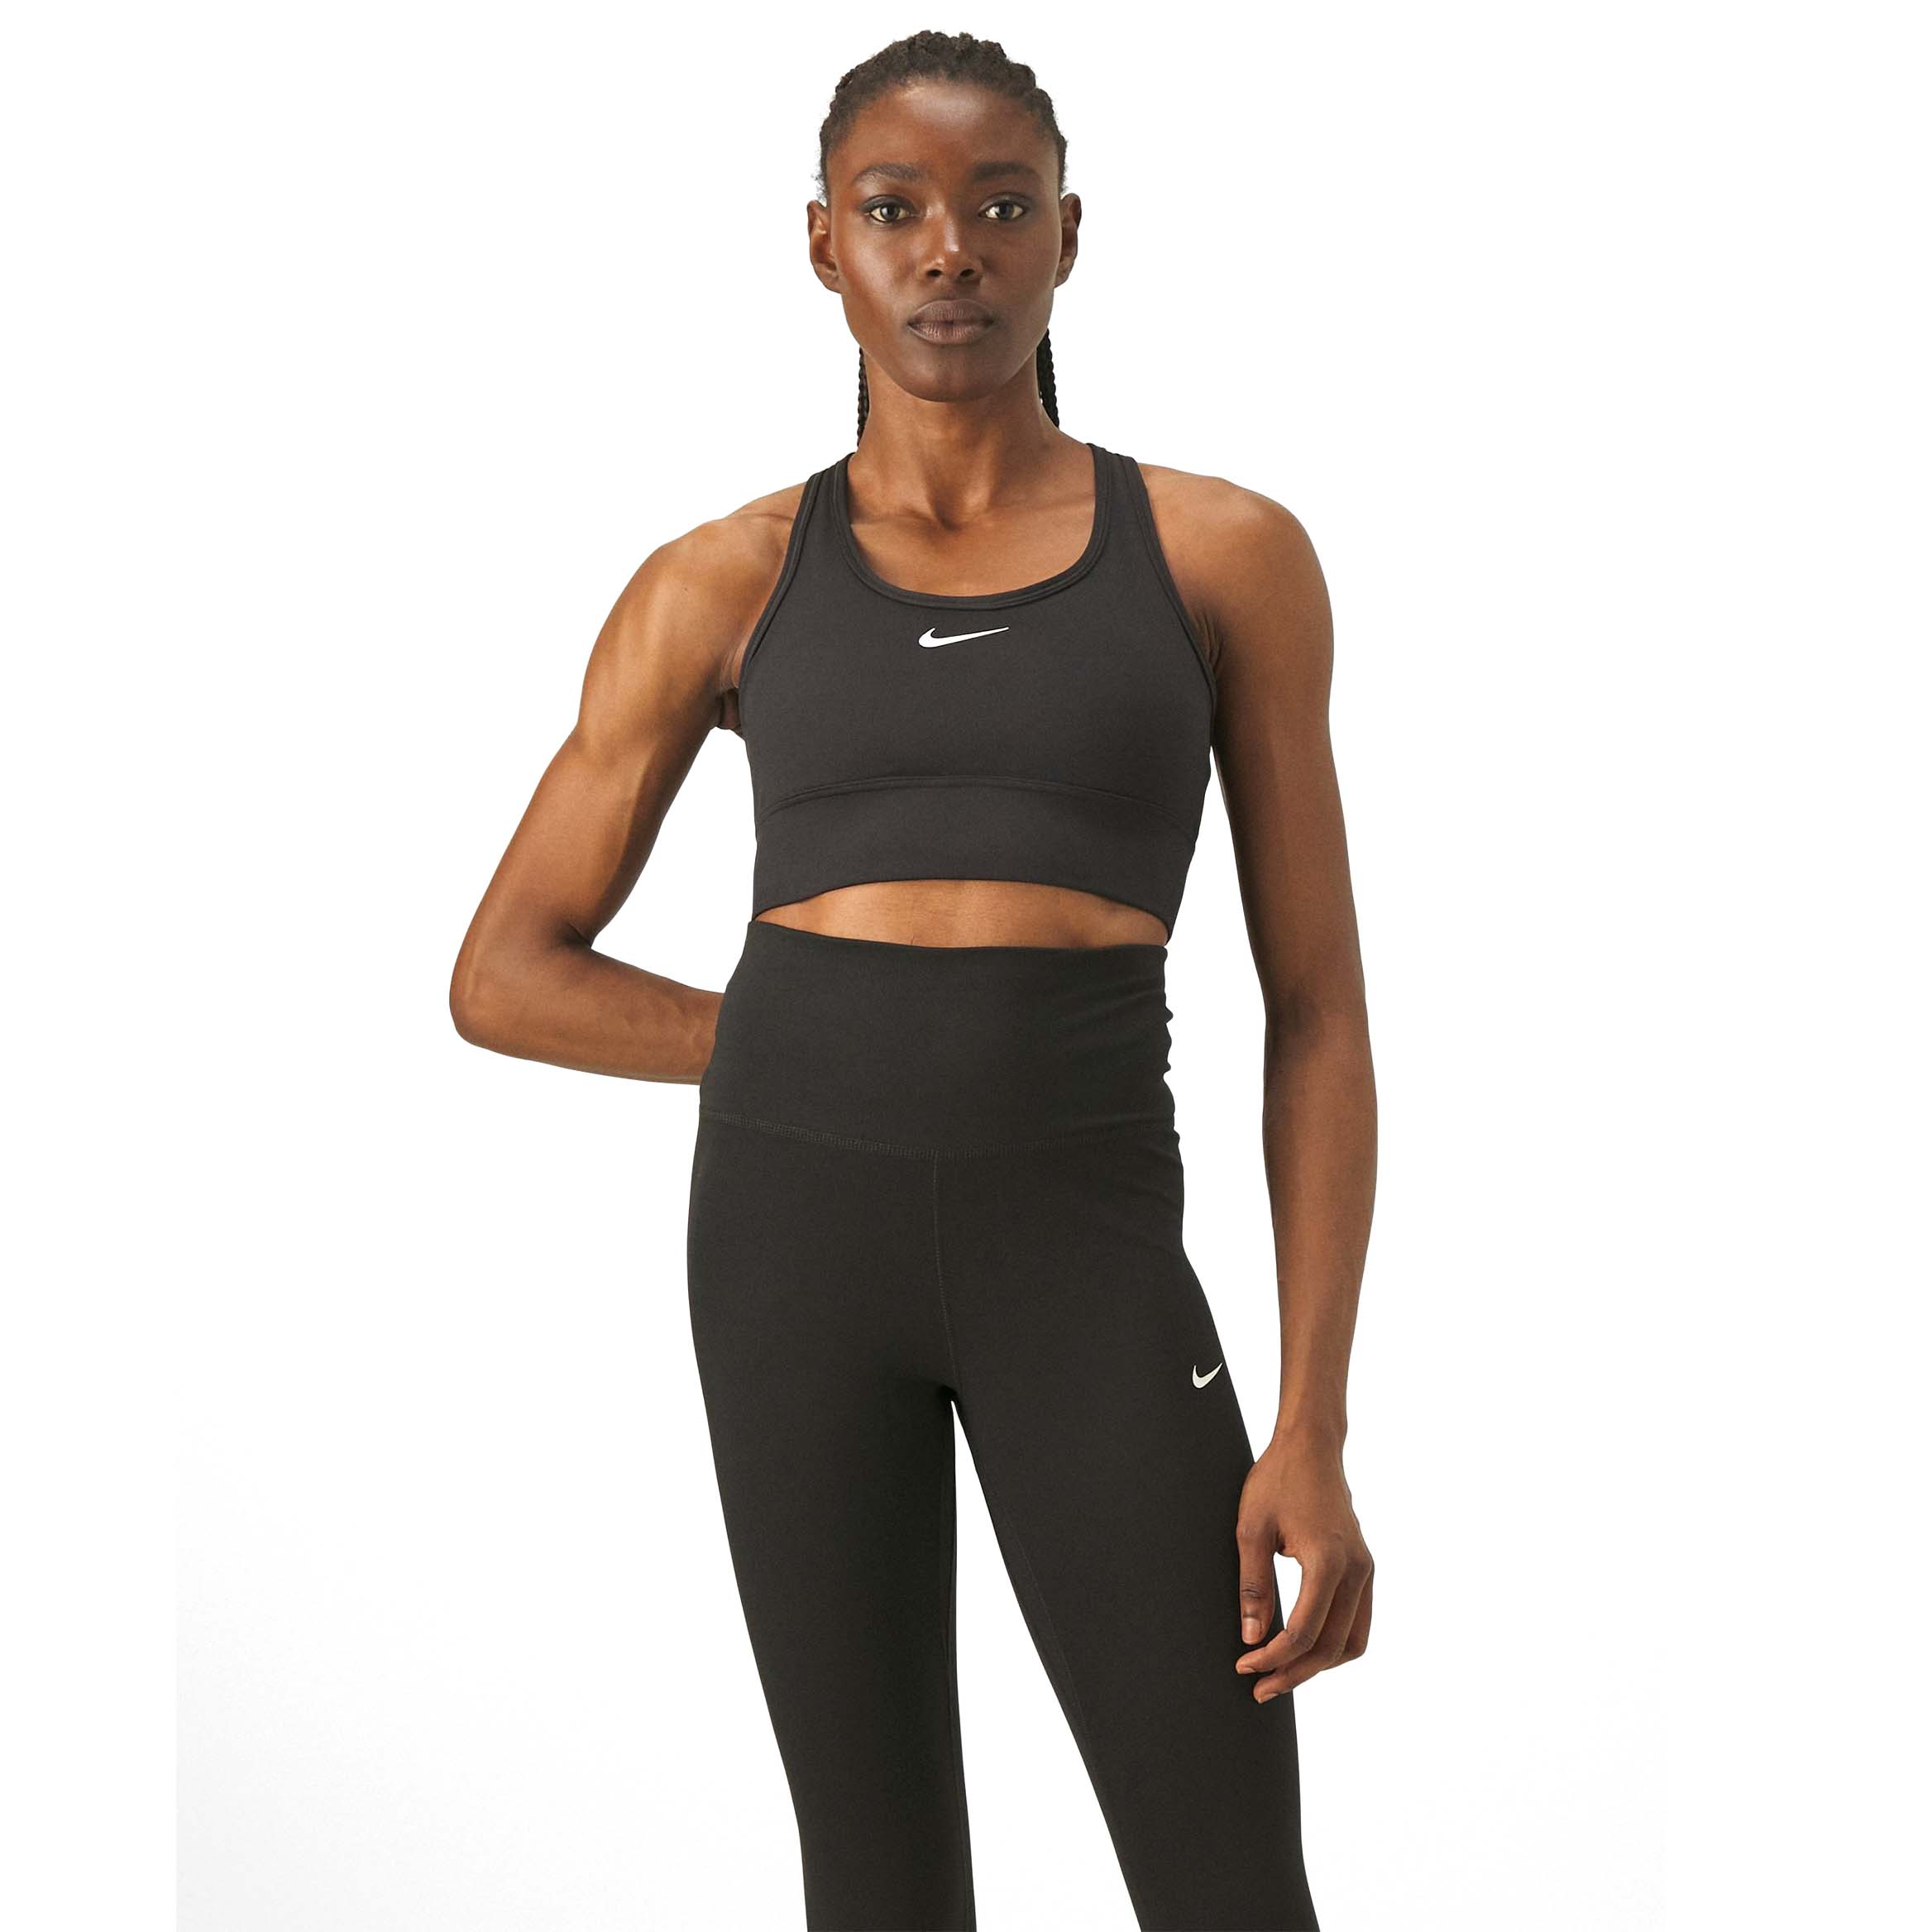 Топ Nike Performance Medium Support Sports, черный/белый